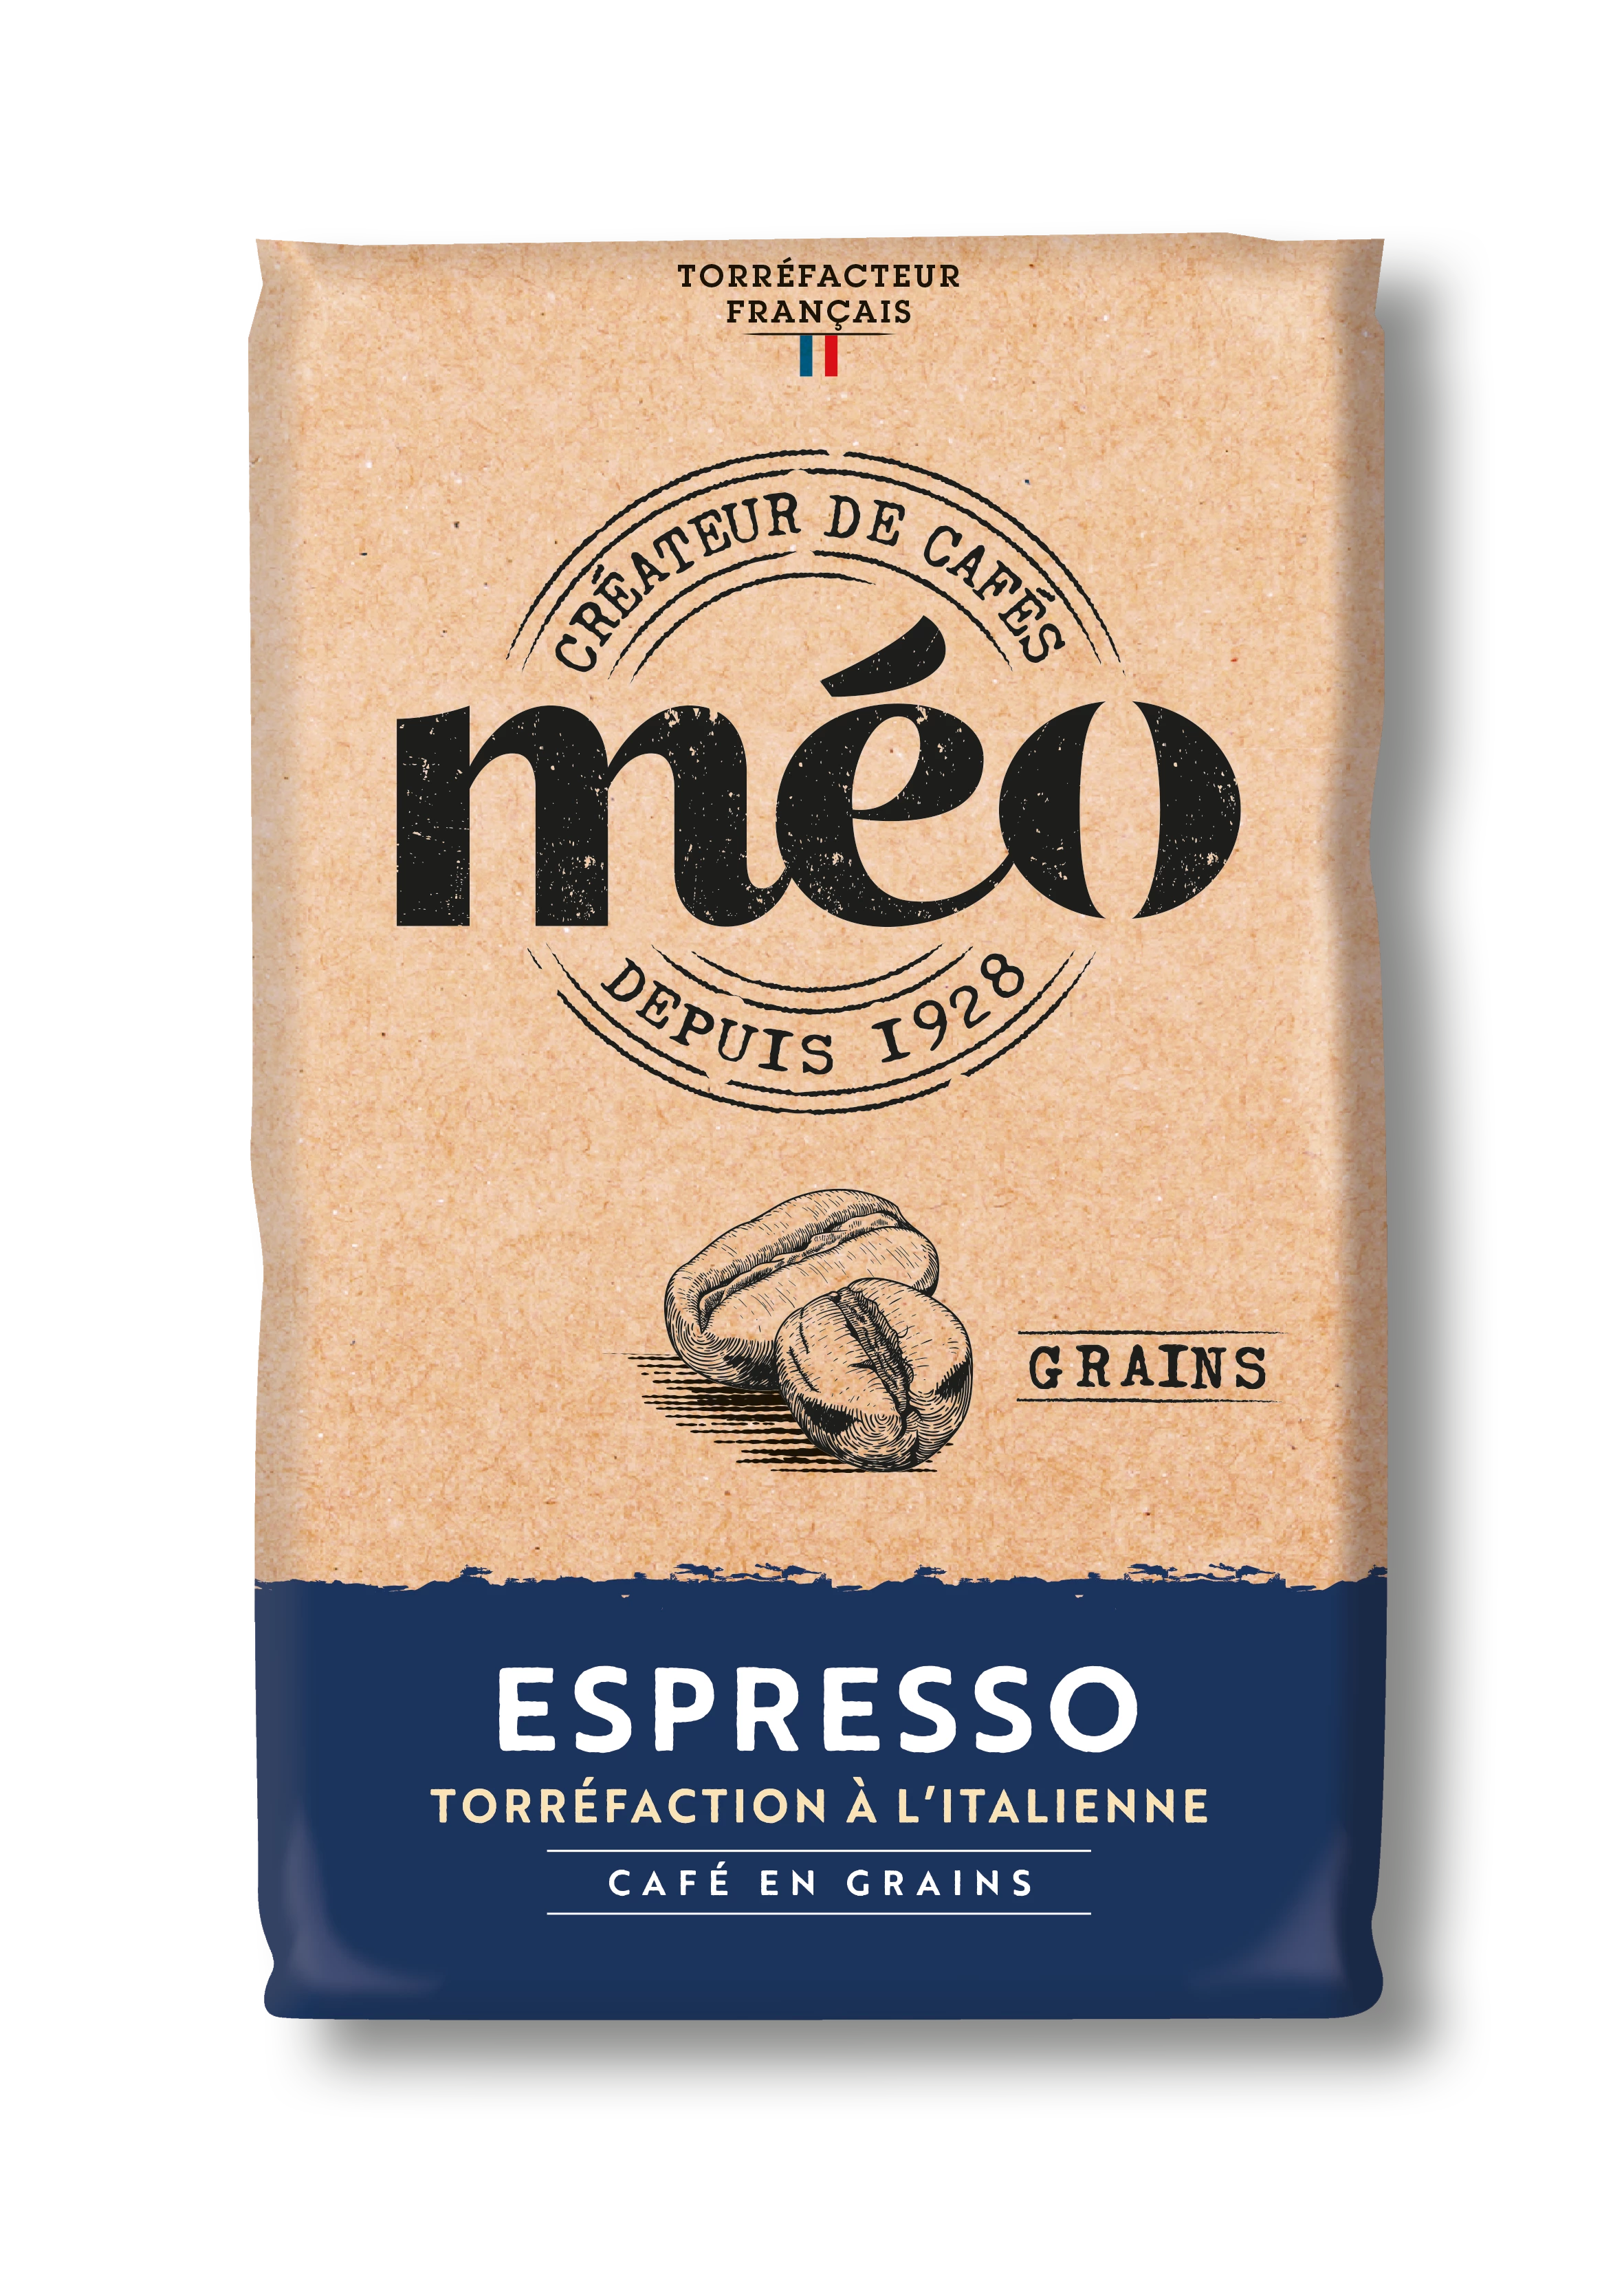 咖啡谷物浓缩咖啡 1kg - CAFES MEO